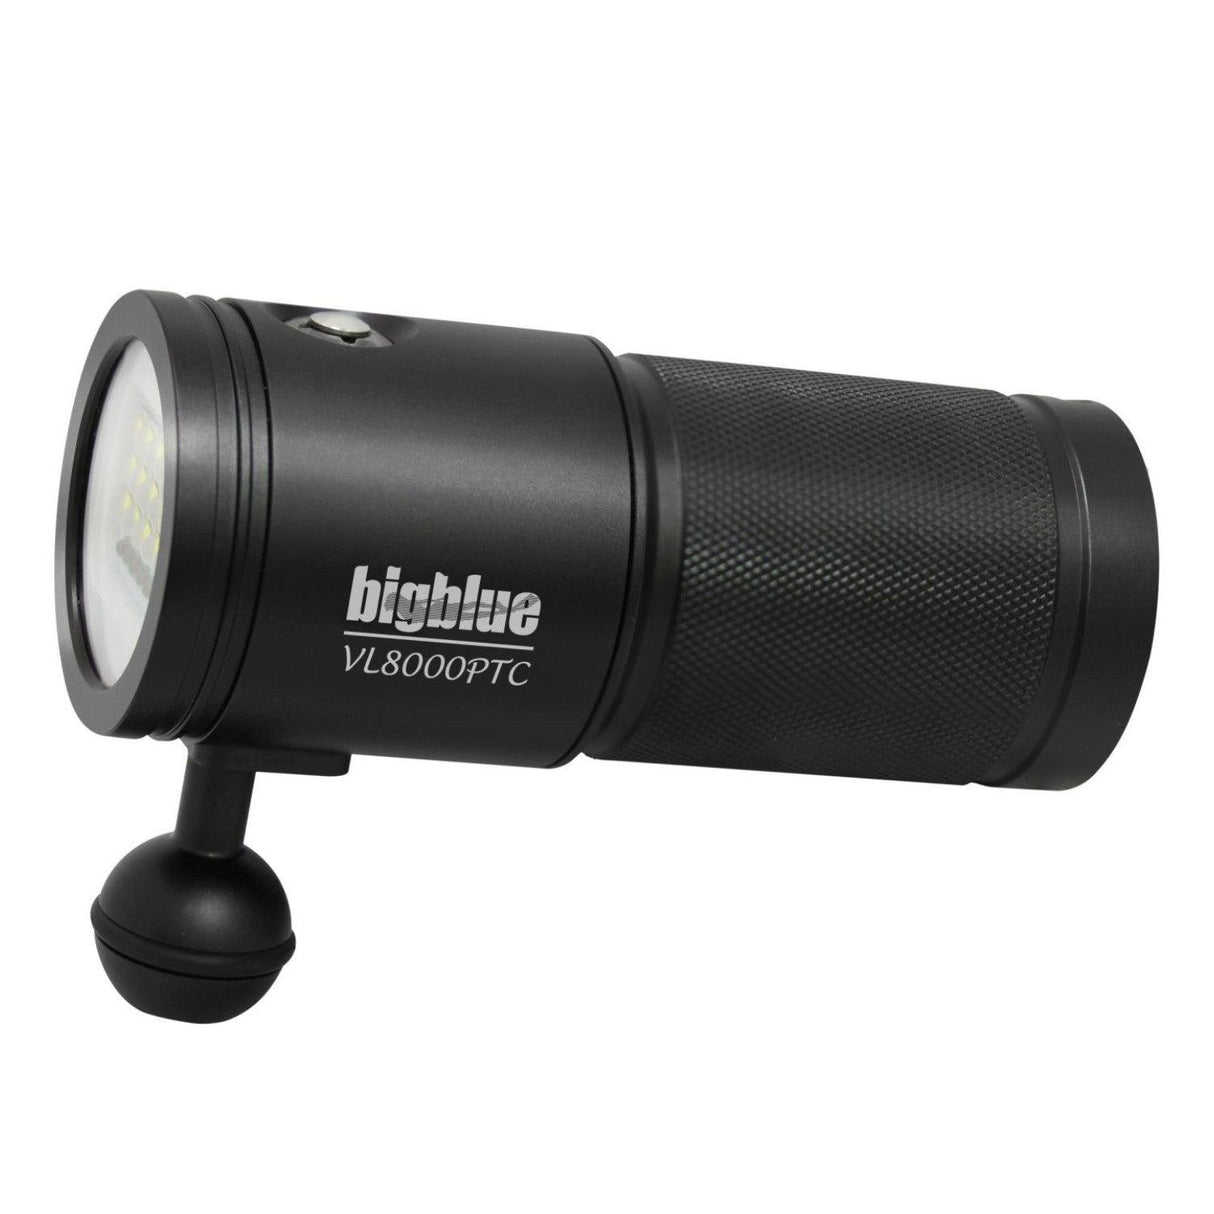 BigBlue 8000 Lumen Tri-Color Video Light - Black-